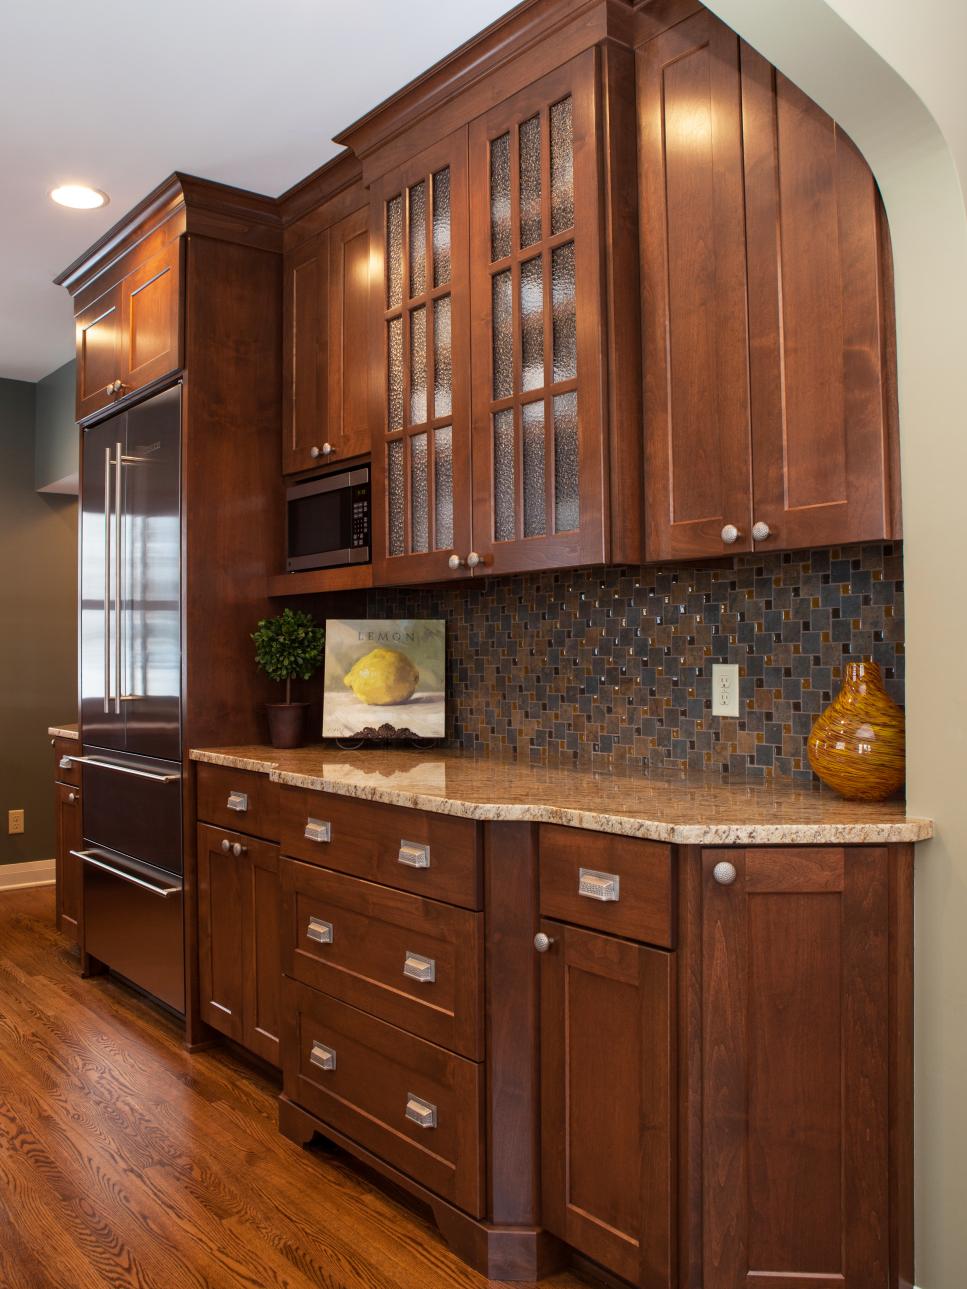 Transitional Kitchen Cabinets With Mosiac Tile Backsplash | HGTV